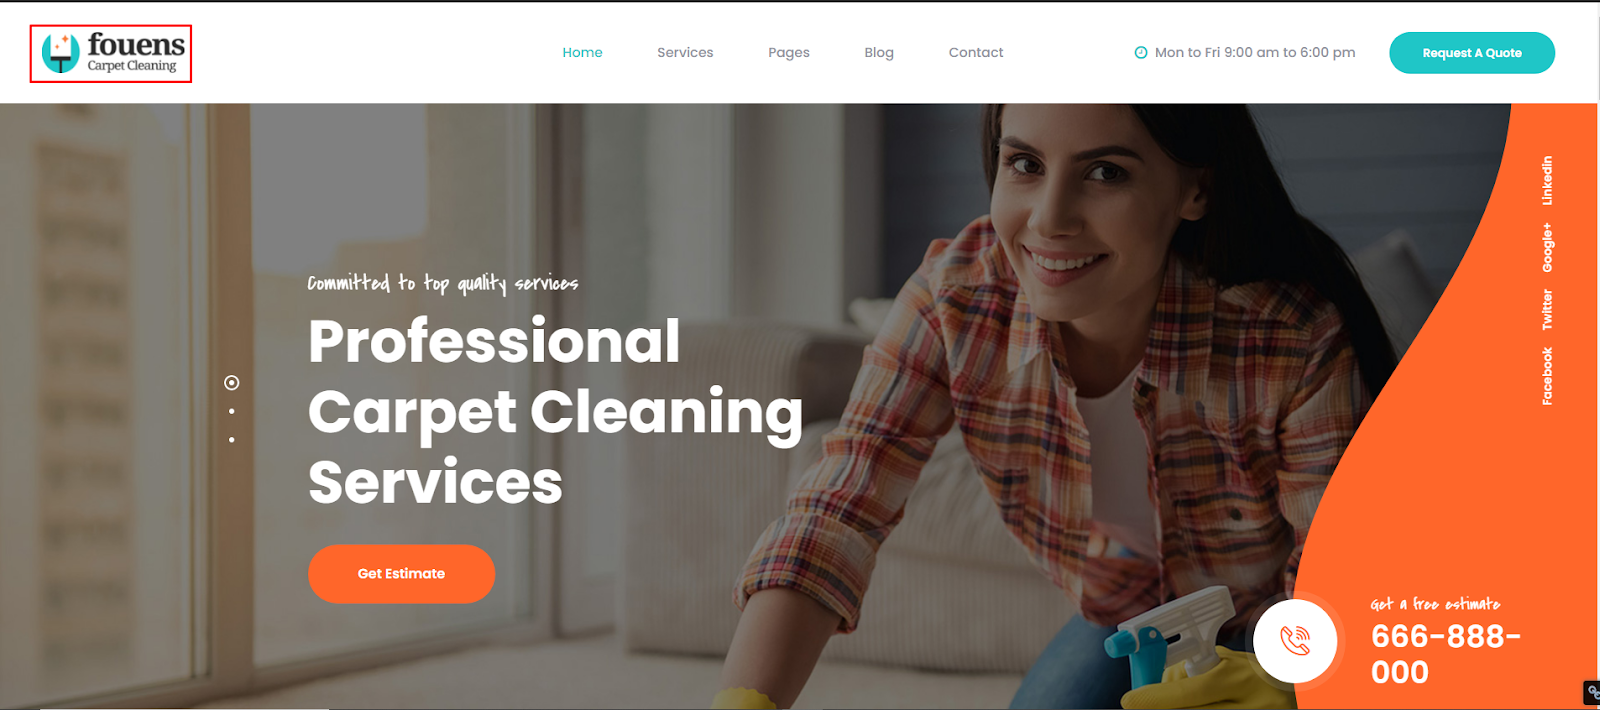 Fouens - Carpet Cleaning WordPress Theme 